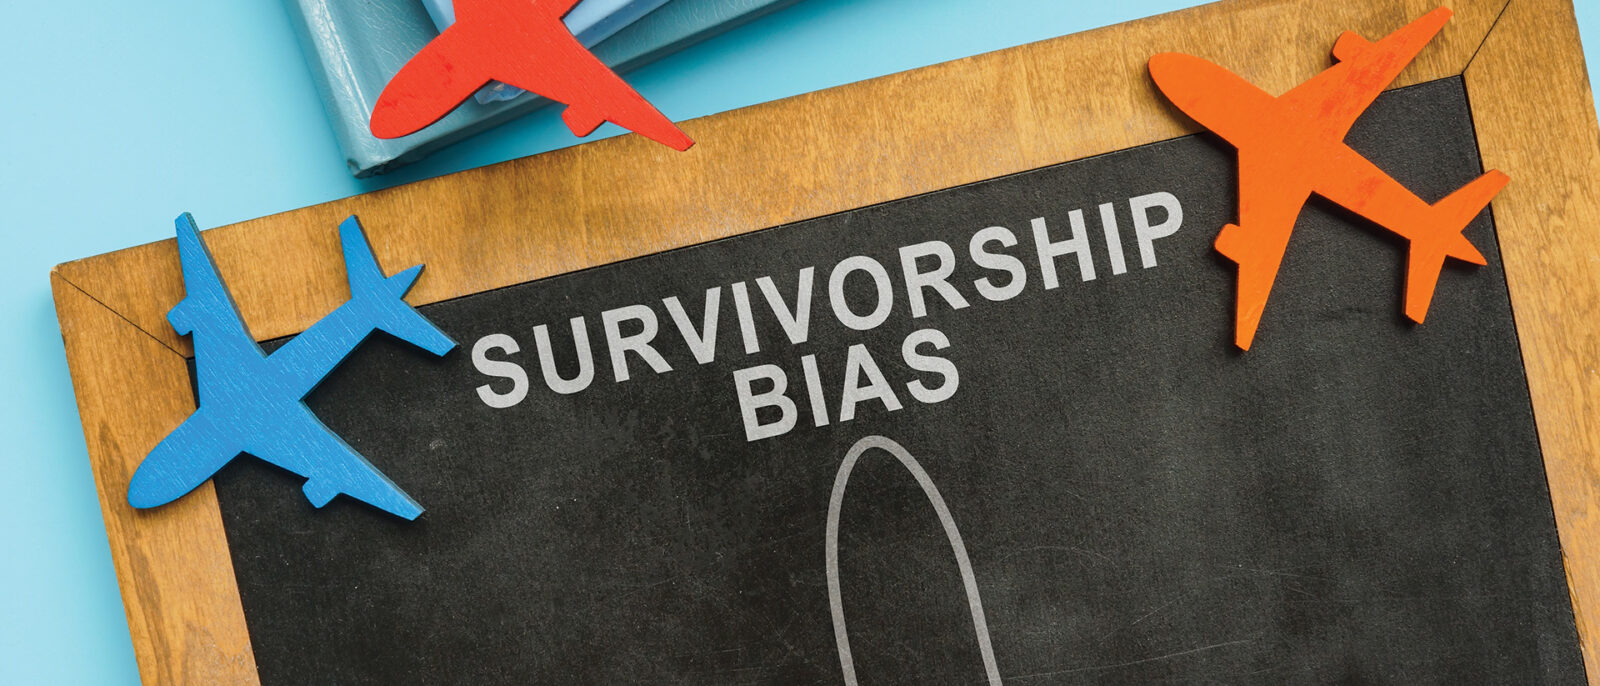 What you should know about survivorship bias